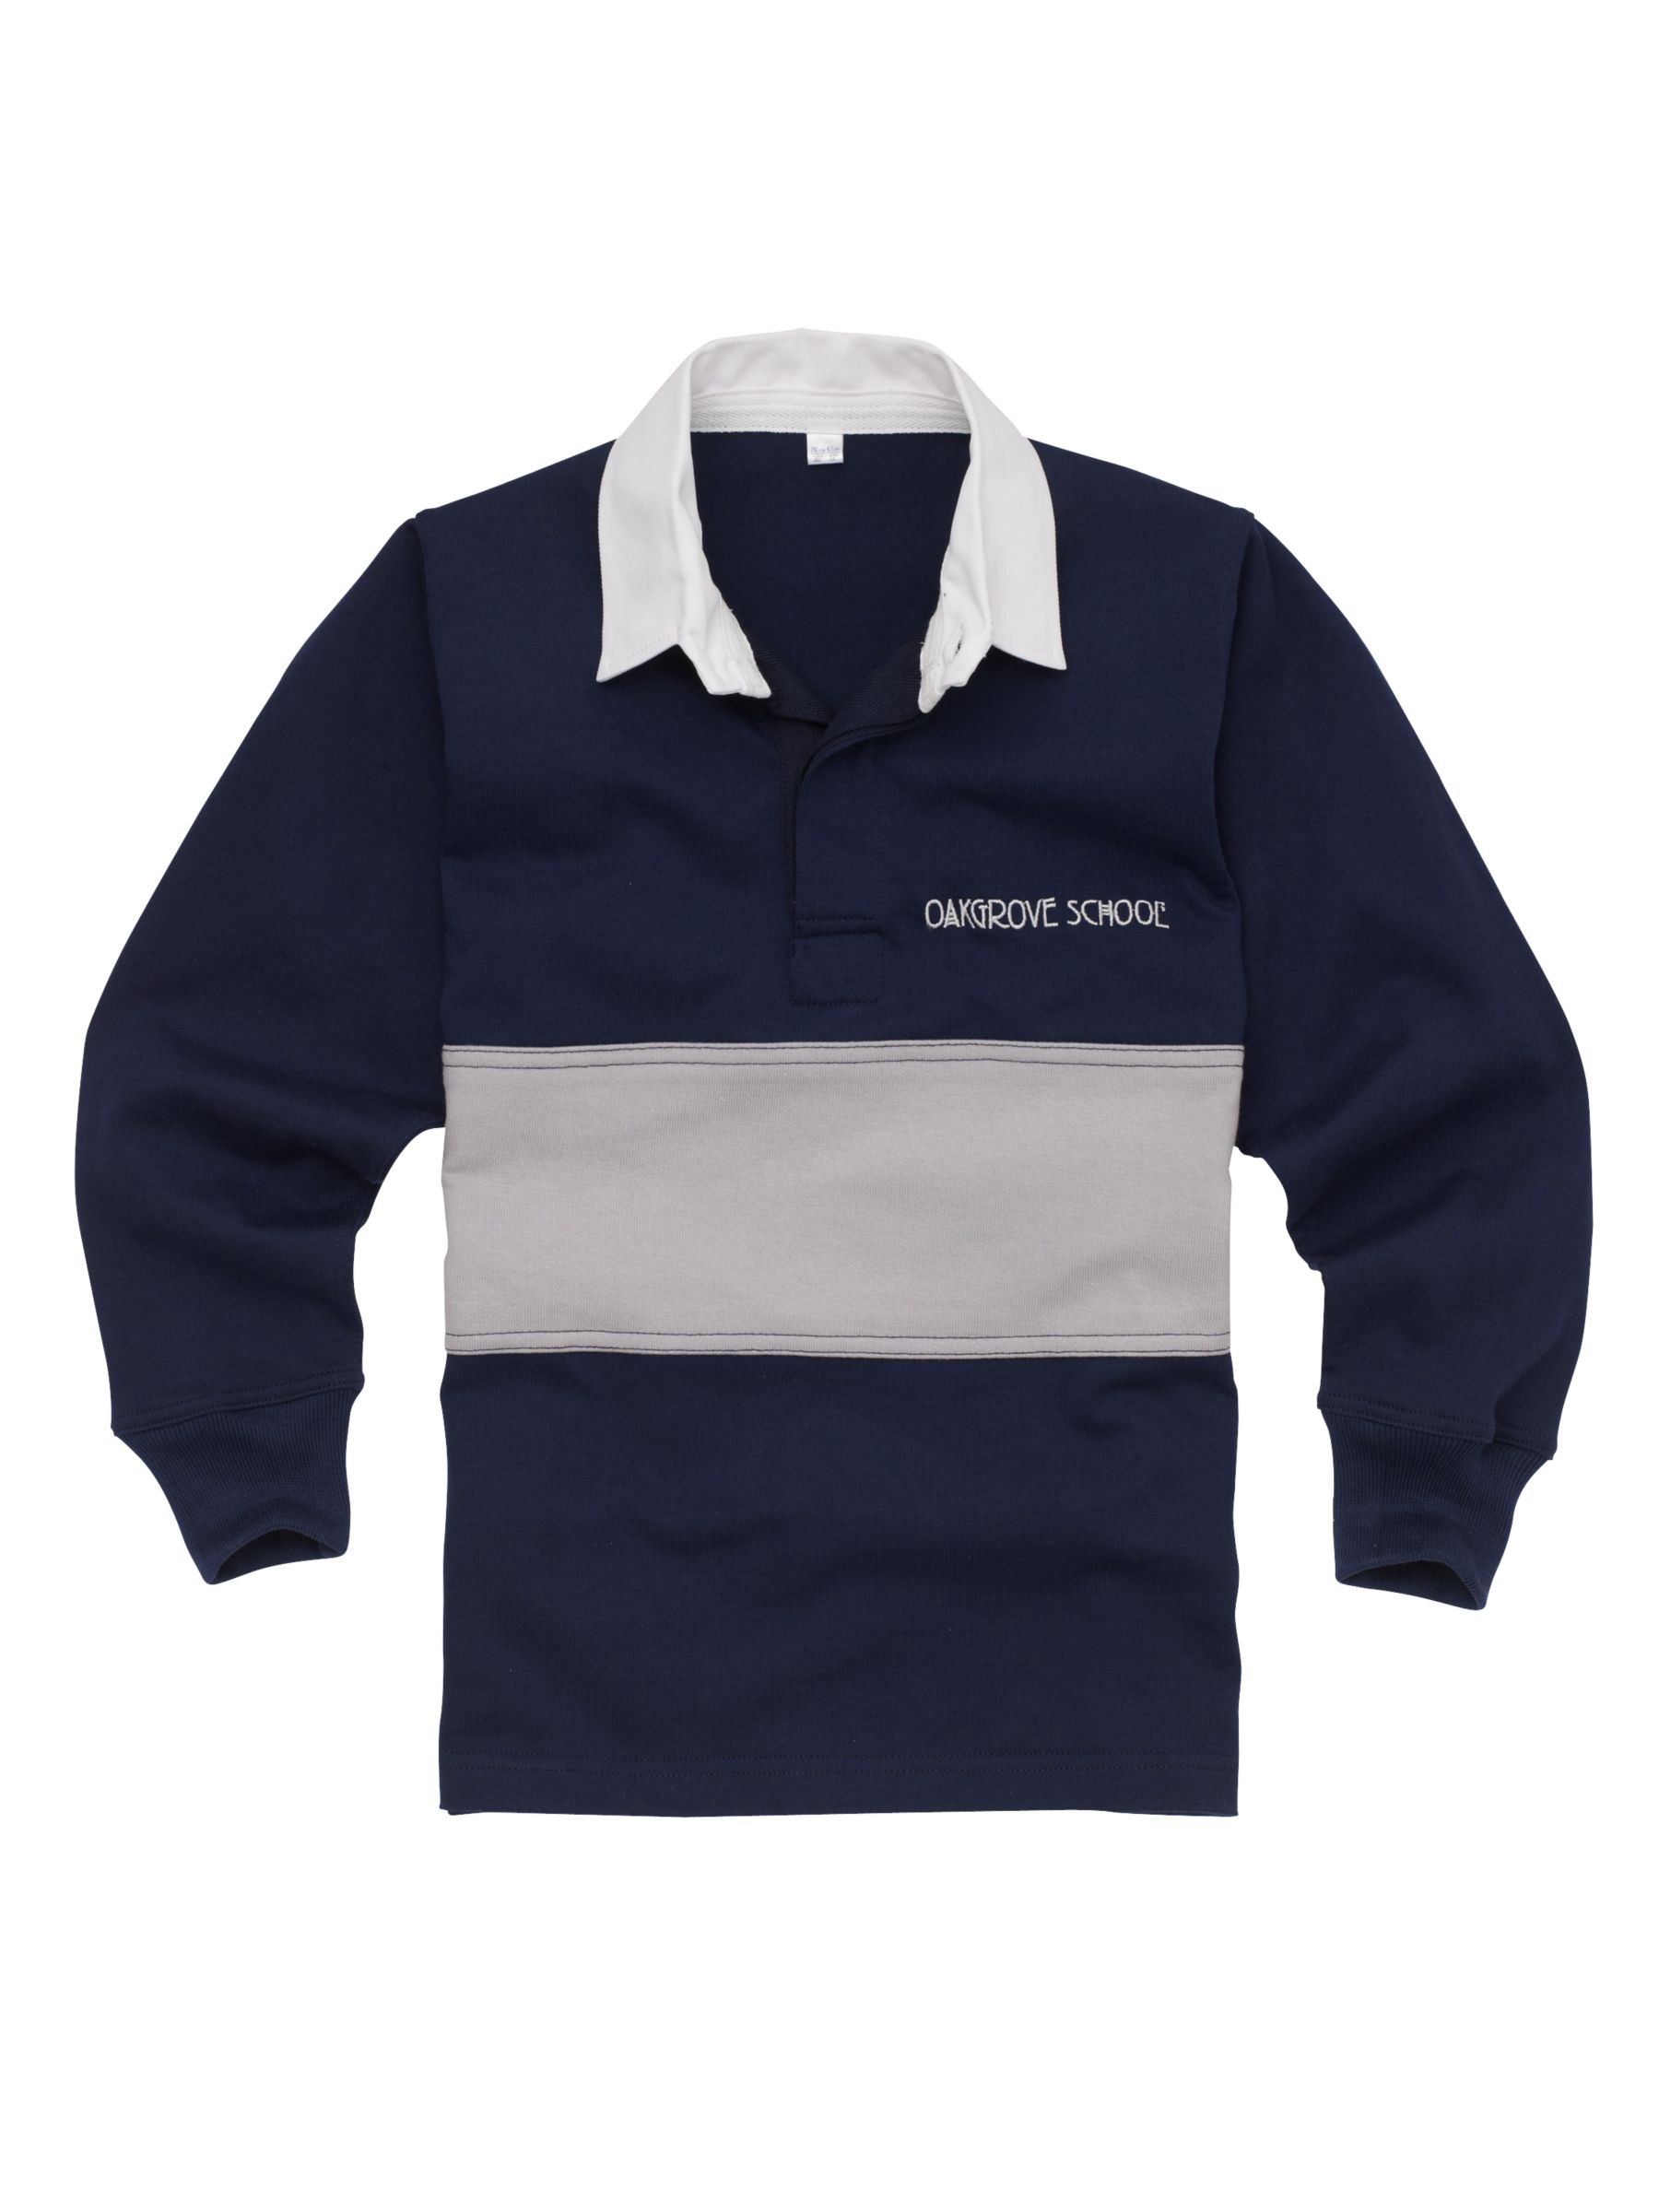 Oakgrove School Unisex Rugby Shirt, Navy